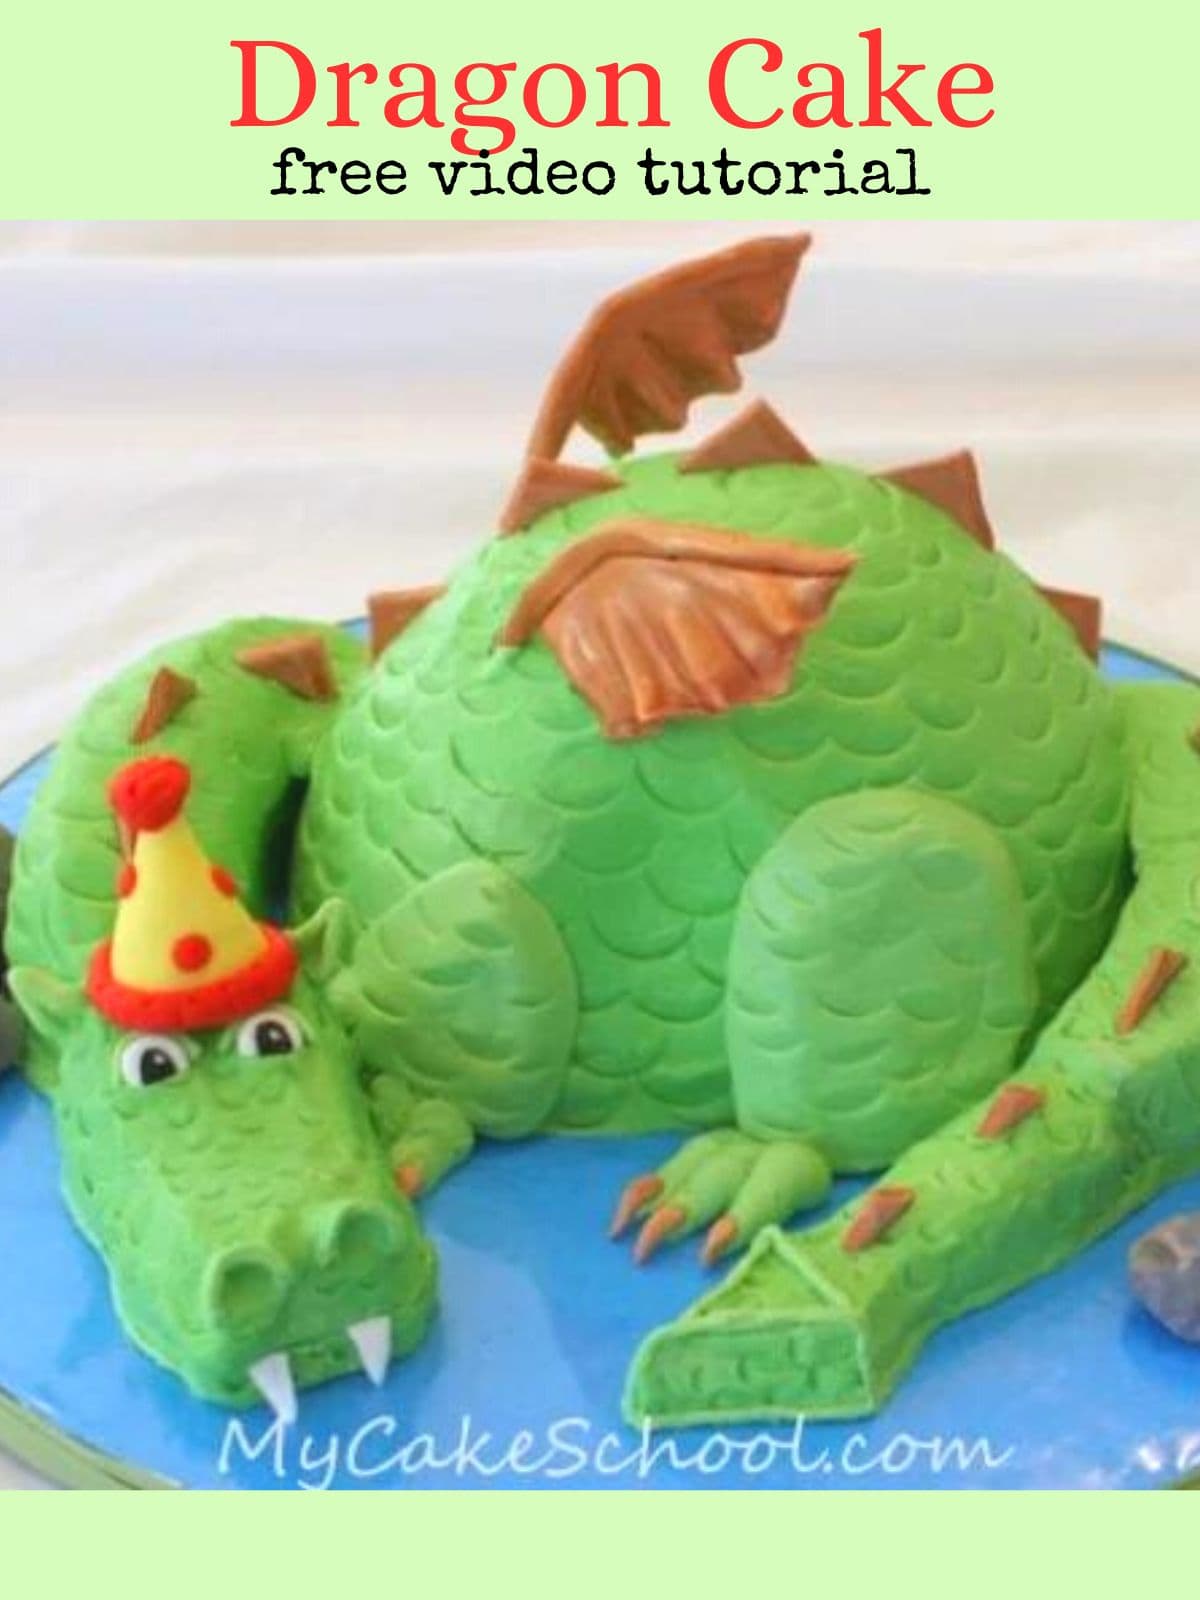 Dragon Cake Video - My Cake School